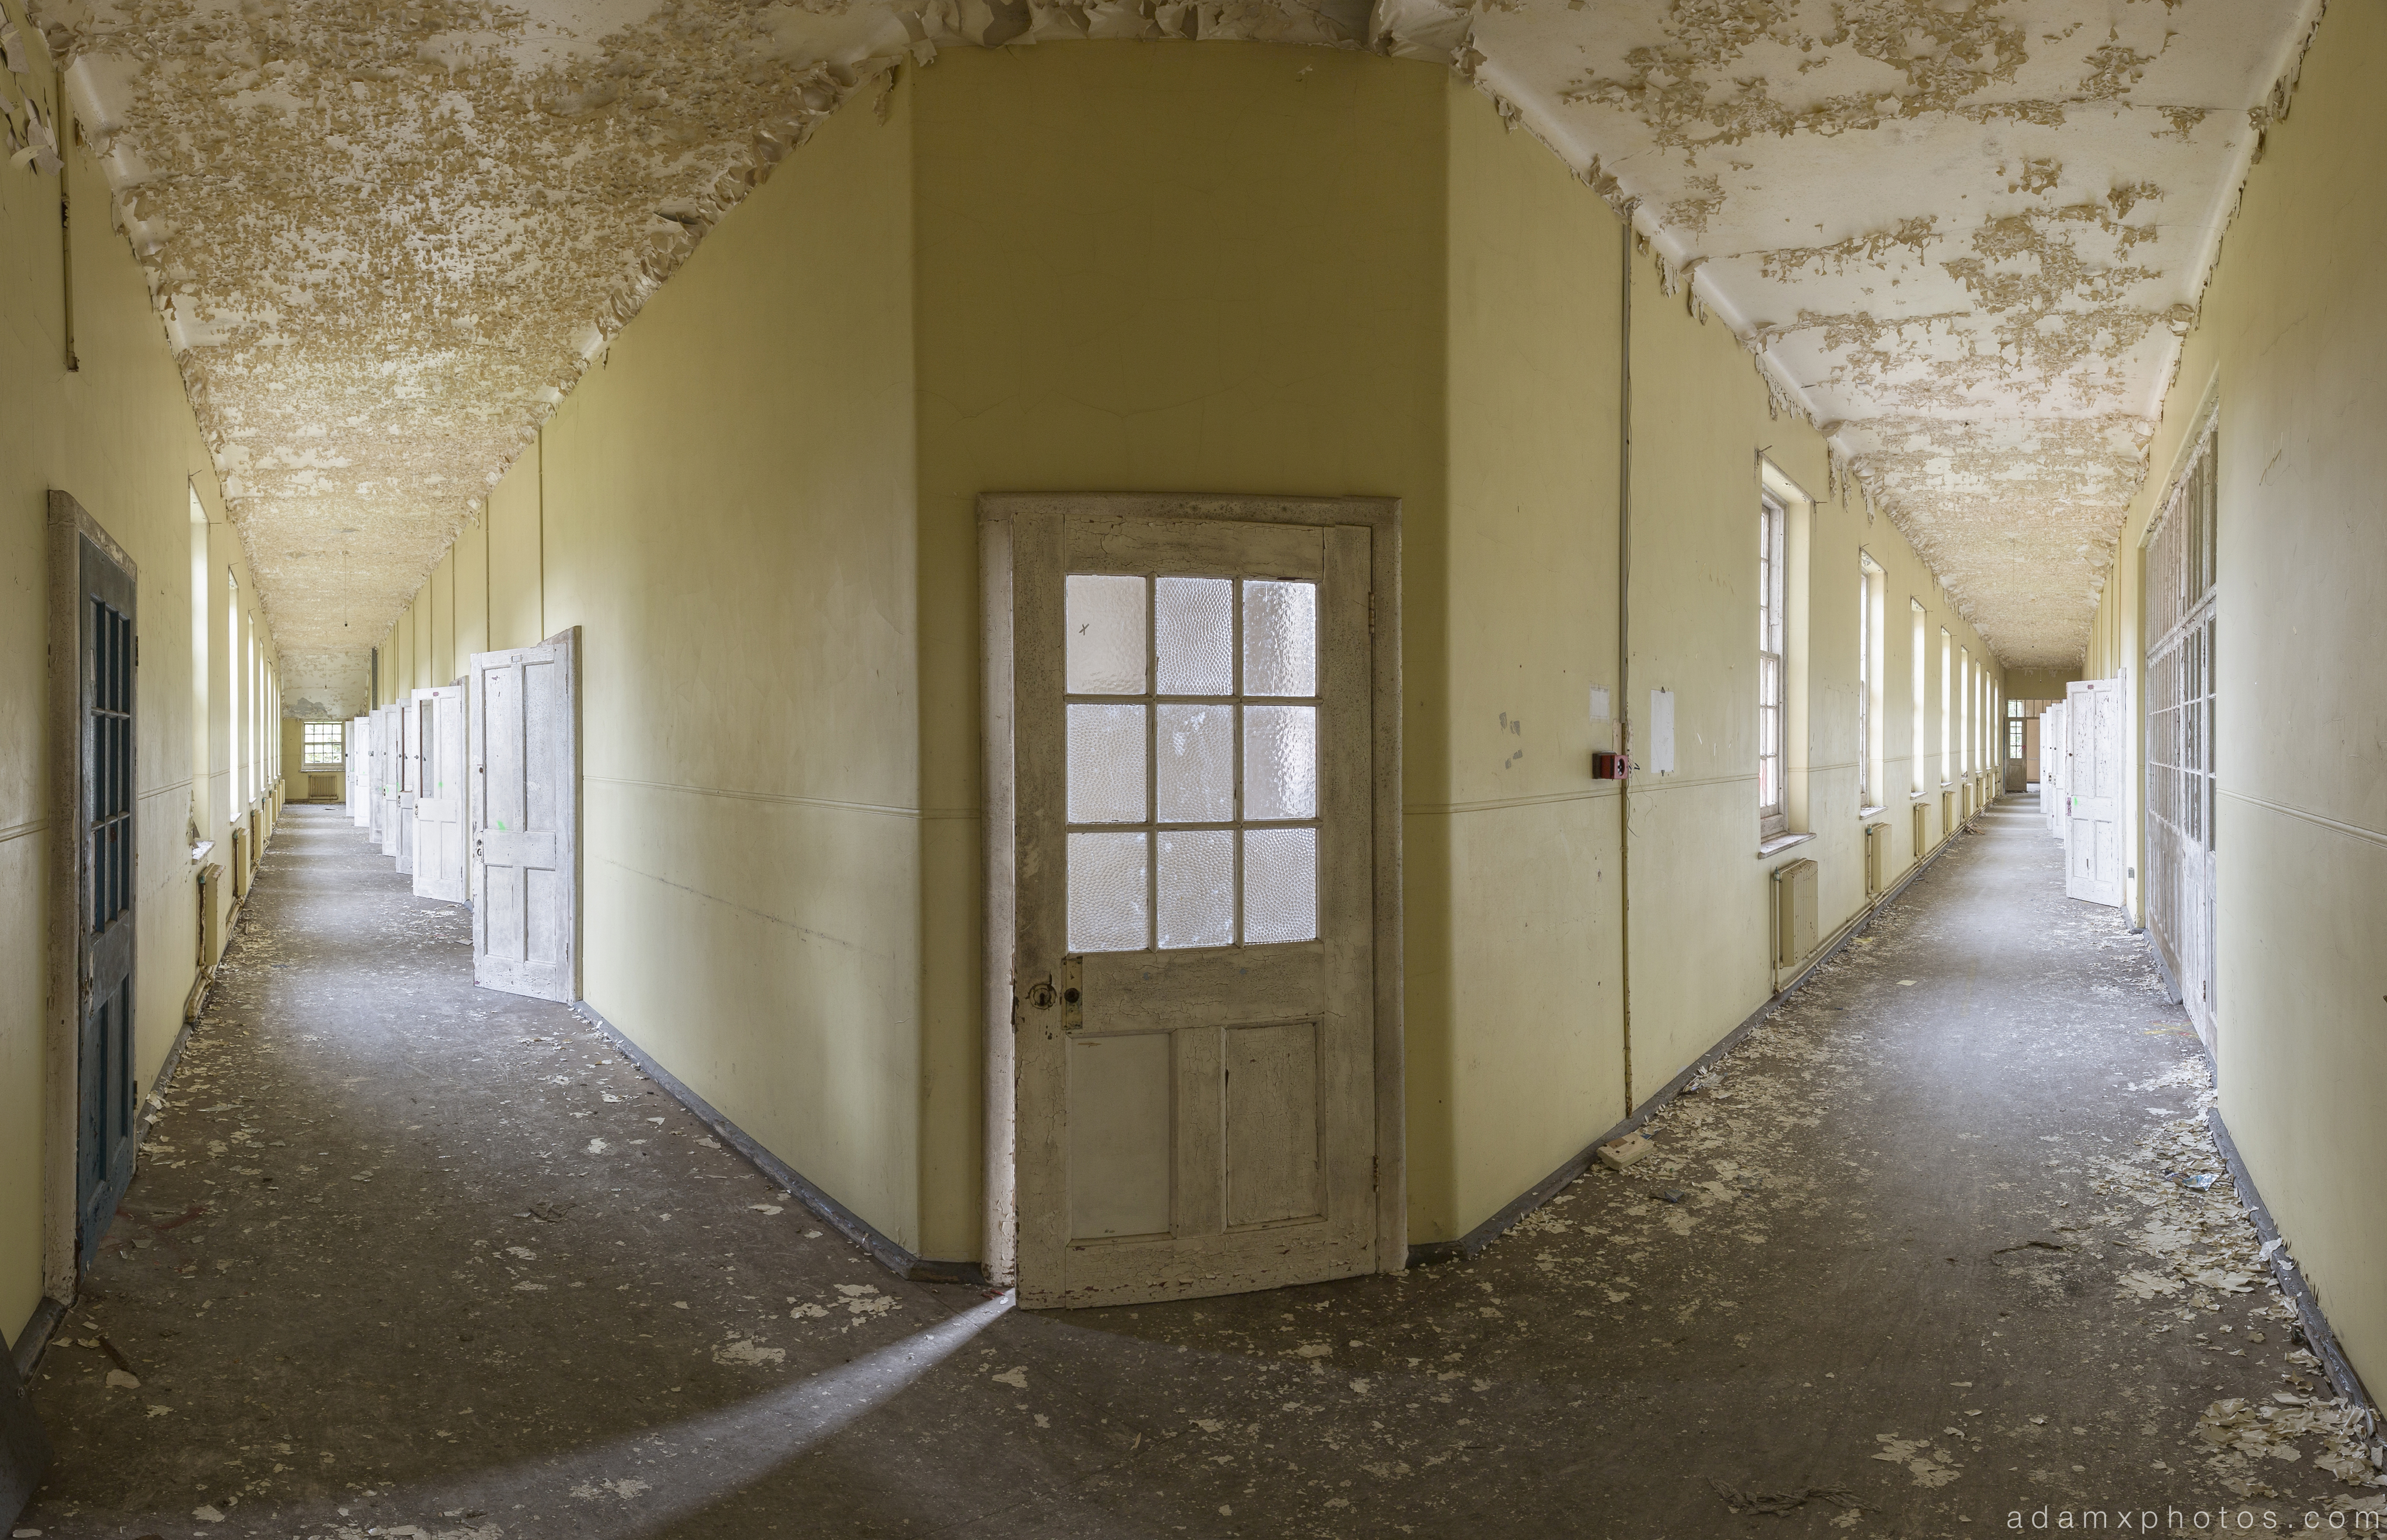 twin corridors peeling paint Severalls Mental Asylum Hospital Sevs Urbex Adam X Urban Exploration Access 2016 Abandoned decay lost forgotten derelict location creepy haunting eerie